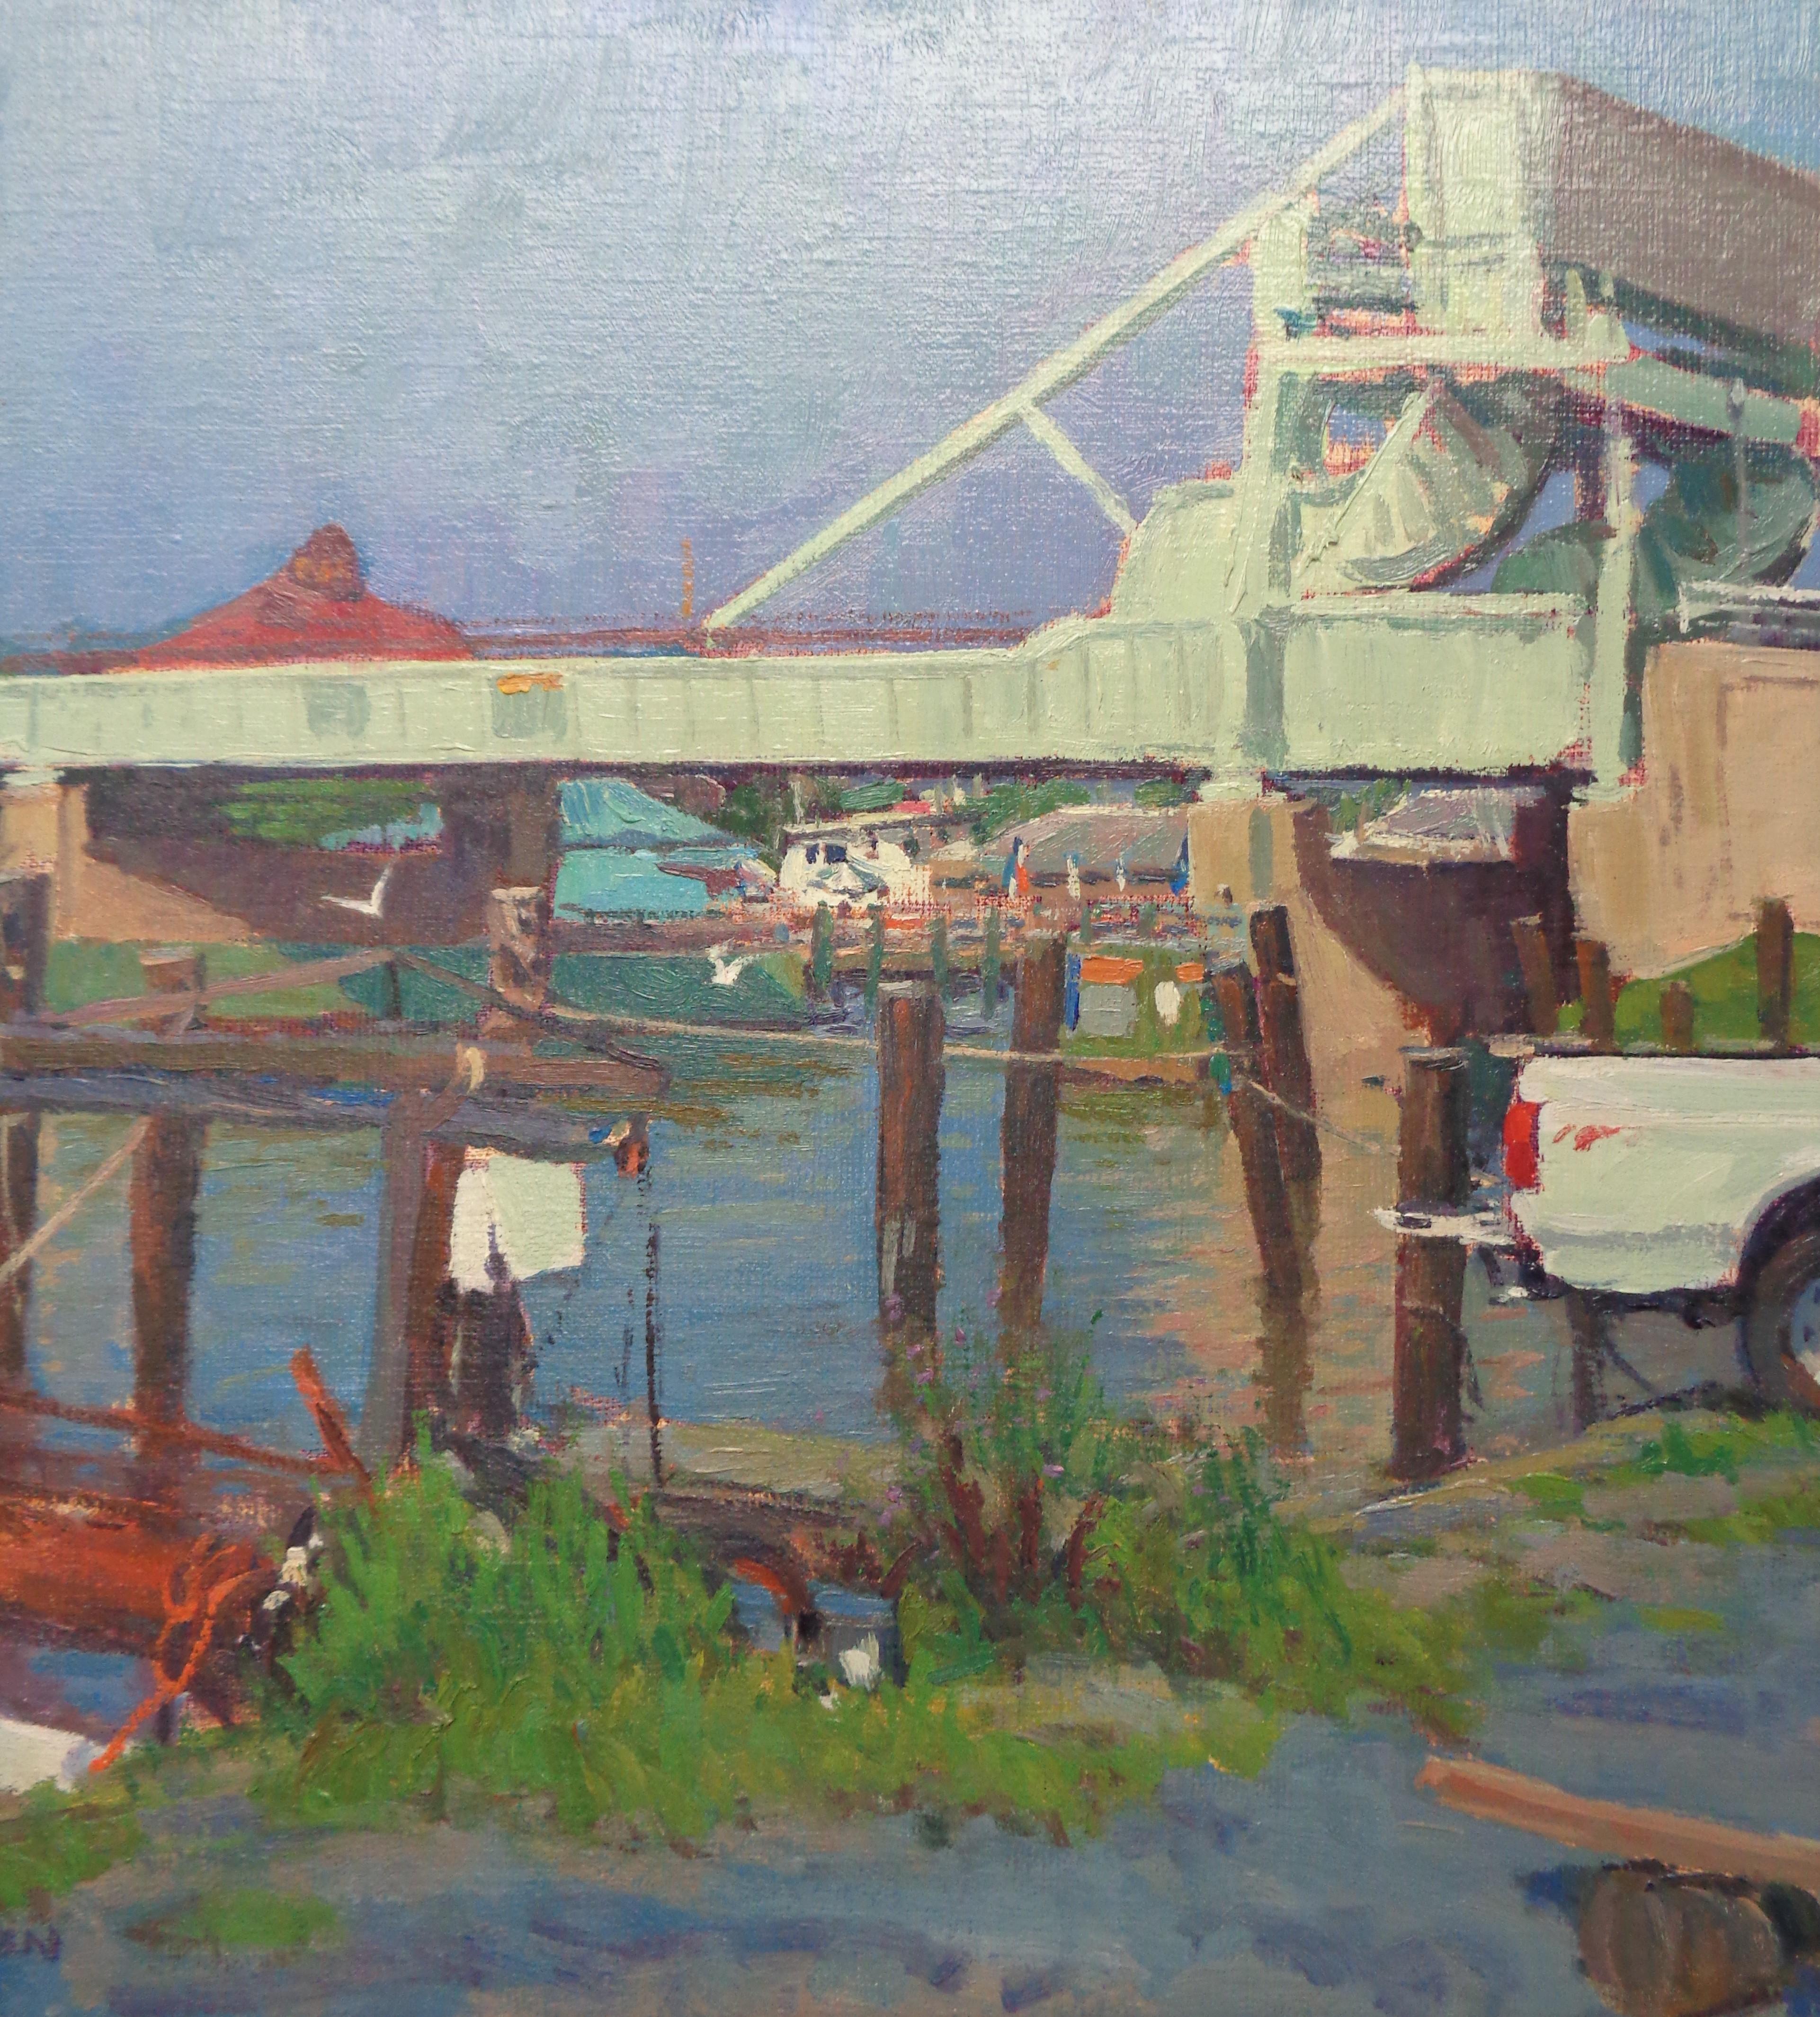  Impressionistic Seascape Painting Michael Budden Tilghman Island Marina MD For Sale 2